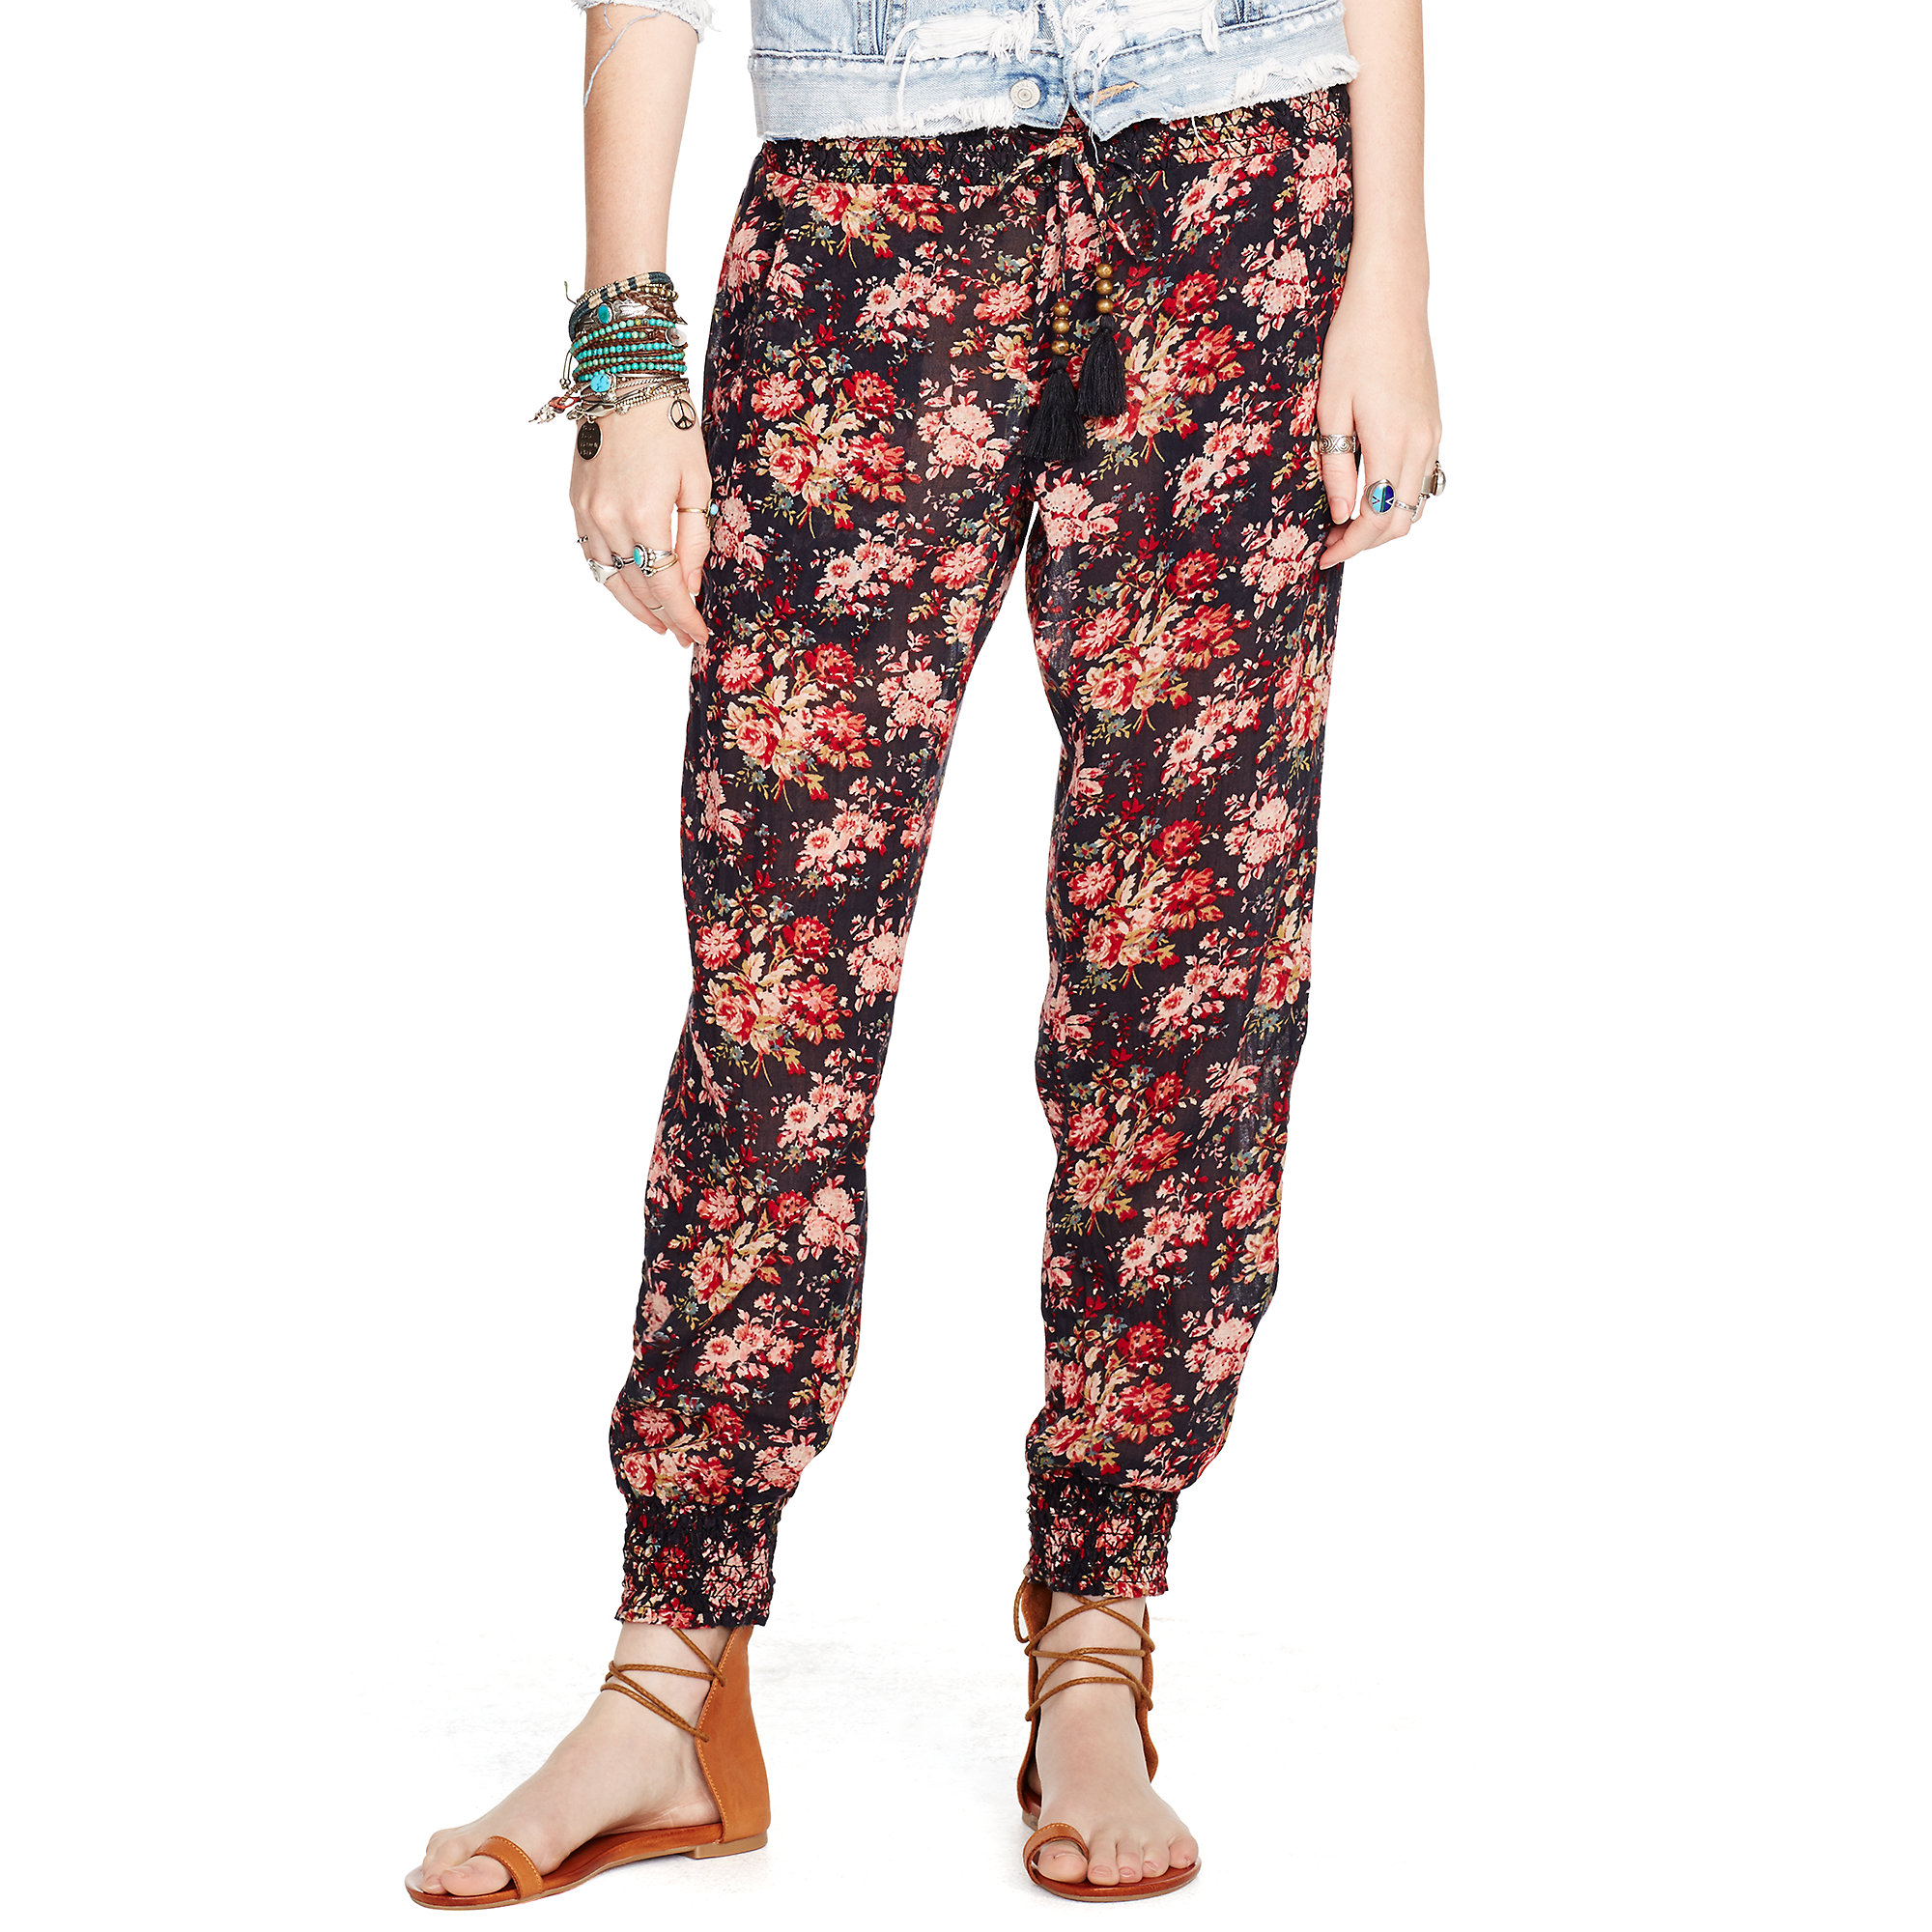 Lyst - Denim & supply ralph lauren Floral-print Soft Pants